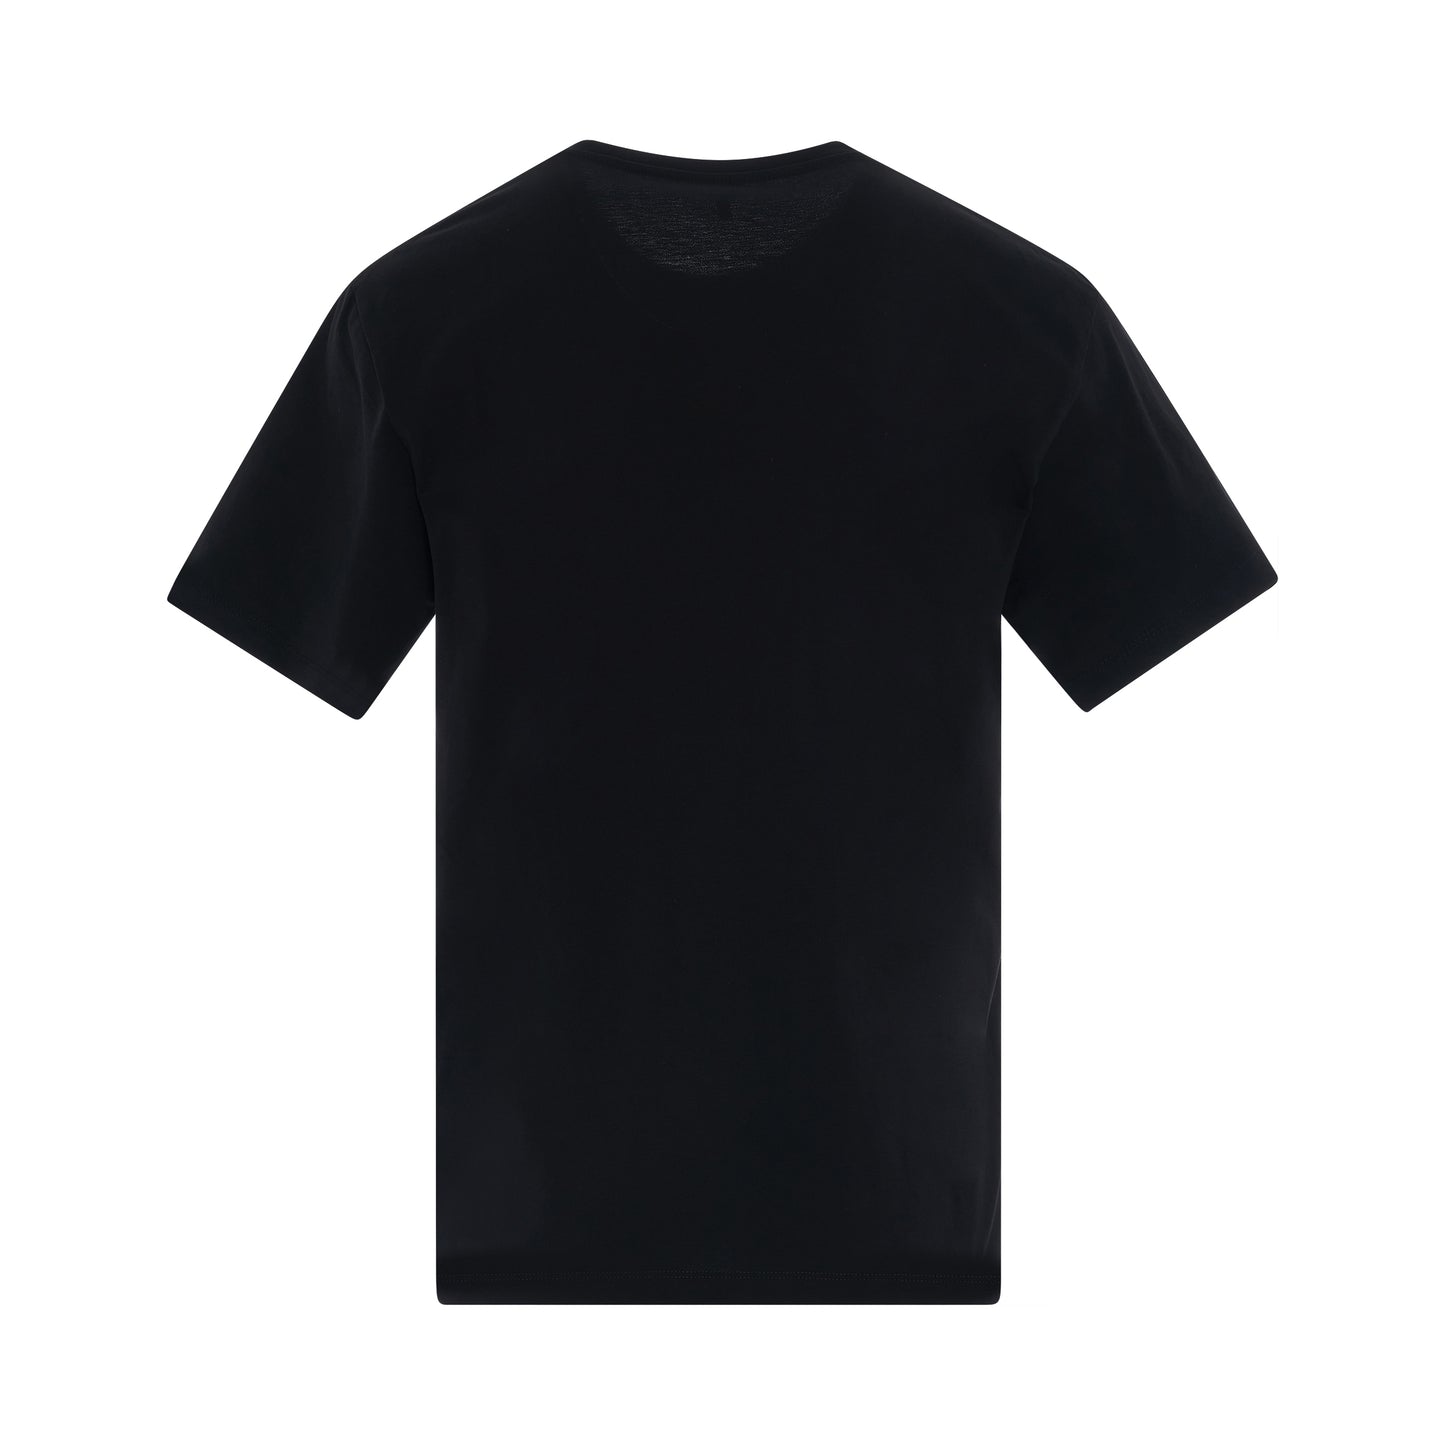 Herbarium Anagram T-shirt in Black